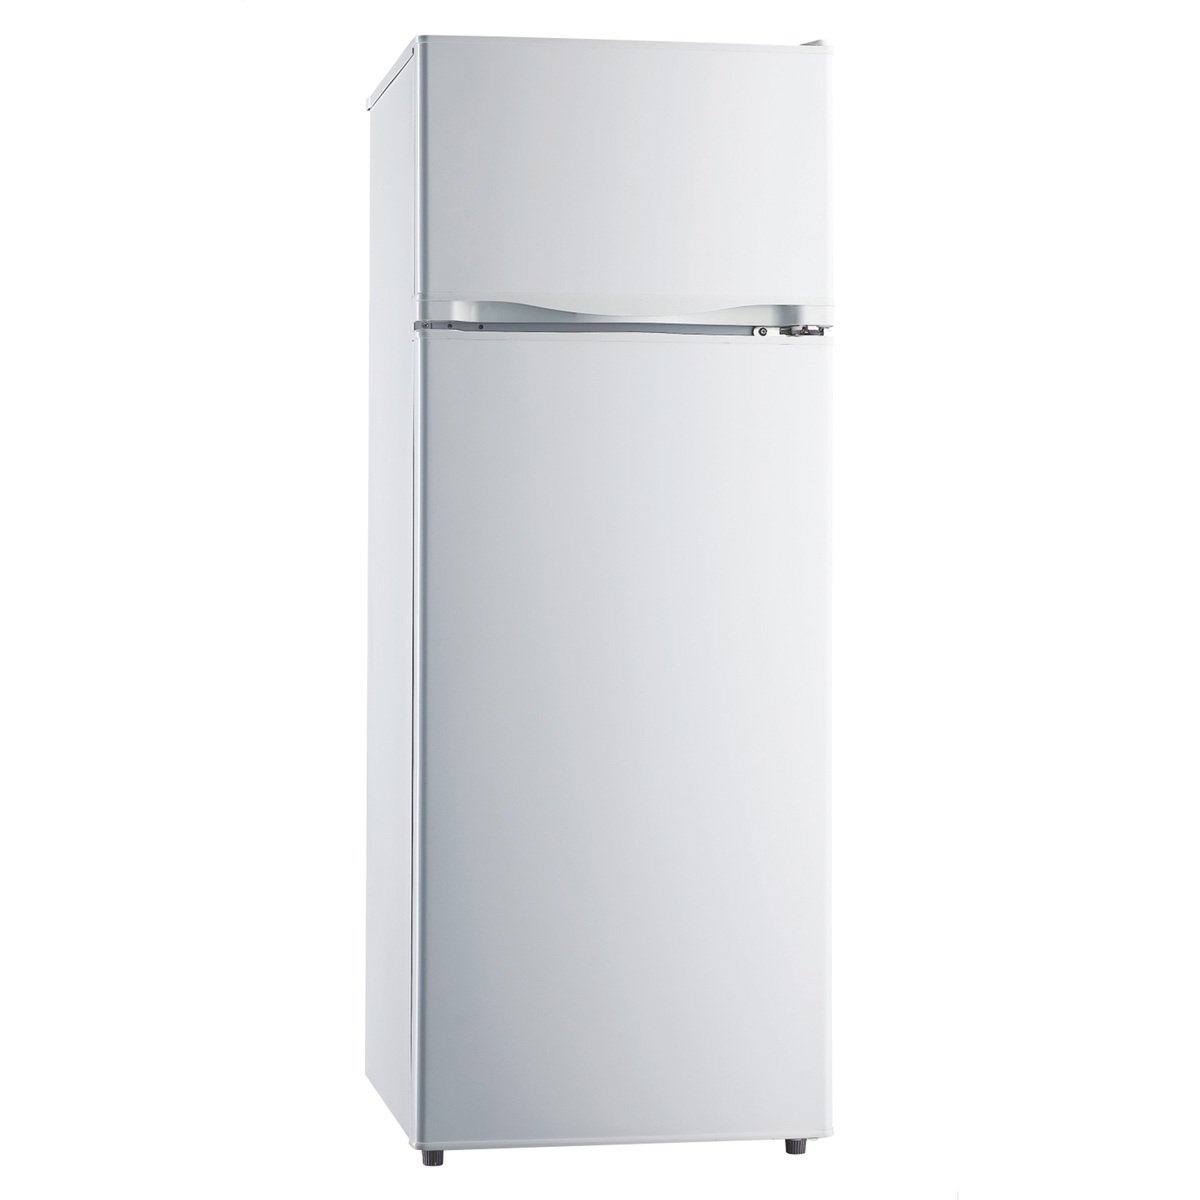 TCL Double Door Refrigerator TM-160A 160Ltr